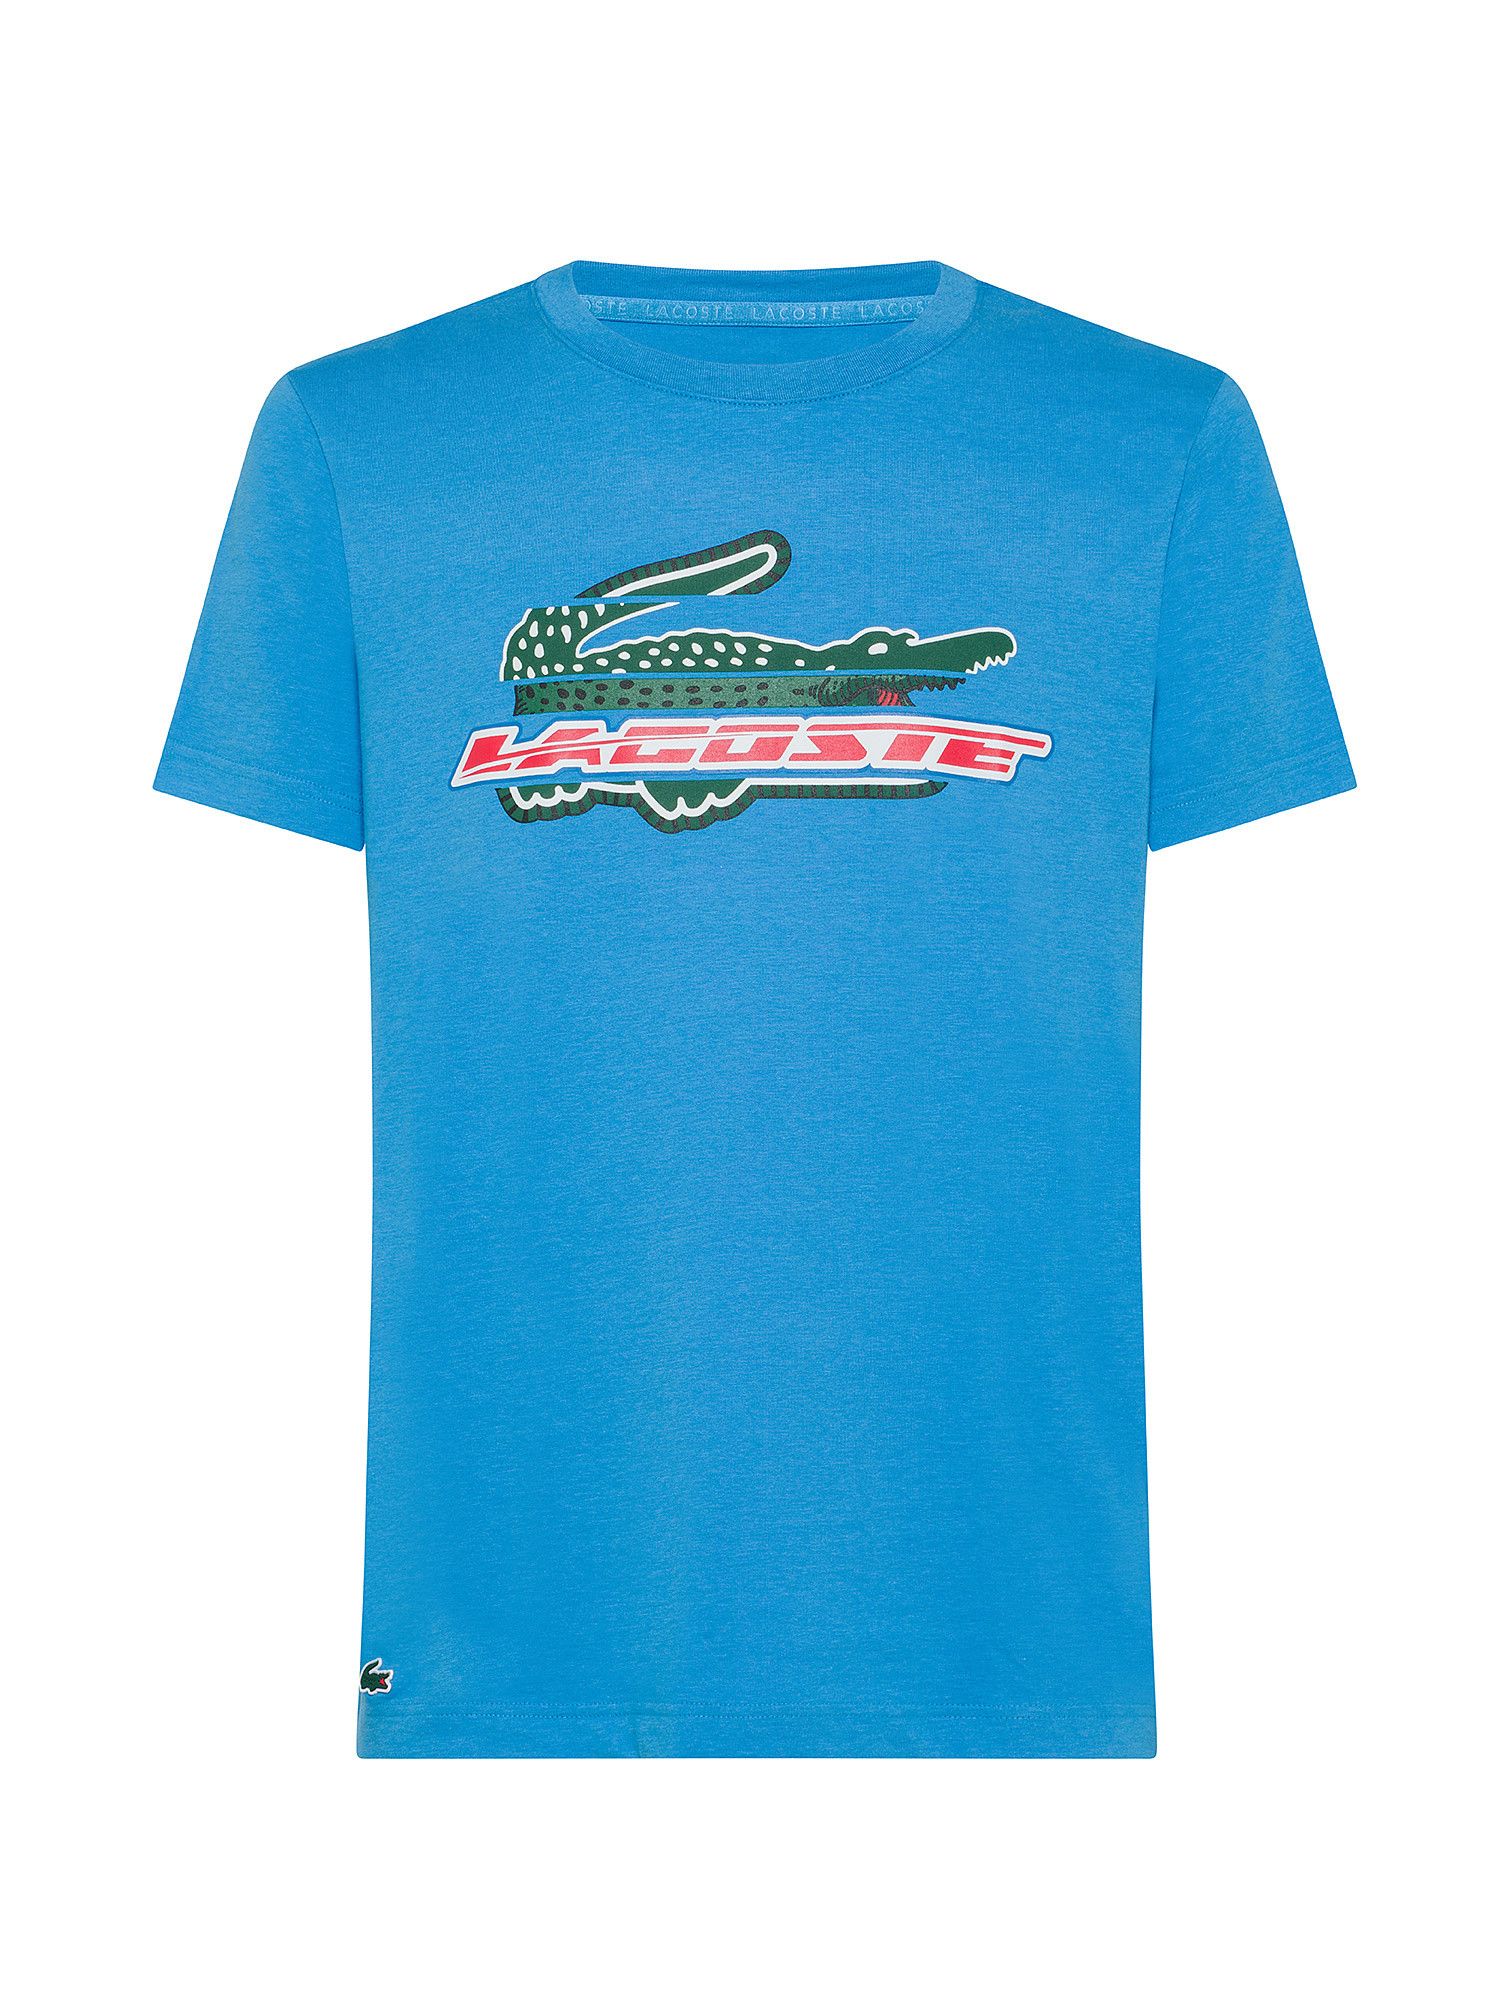 Lacoste - T-shirt sportiva regular fit, Azzurro, large image number 0